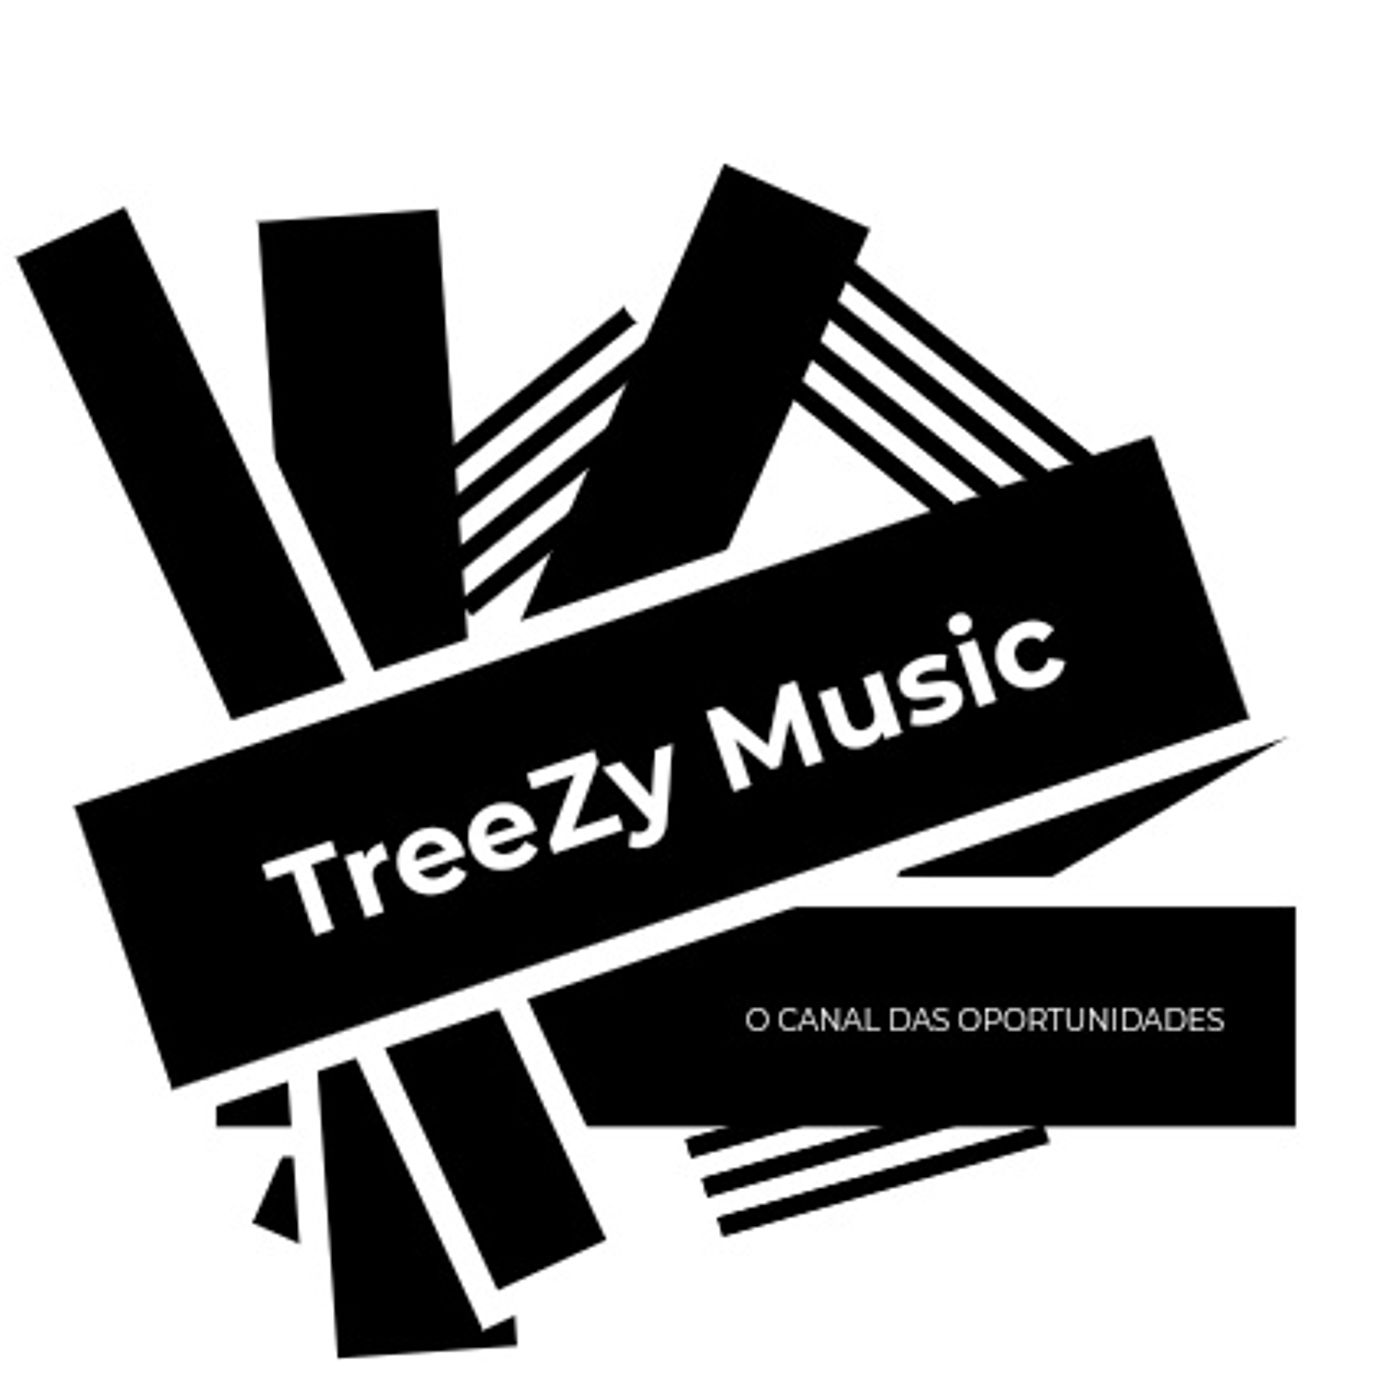 TreeZy Music